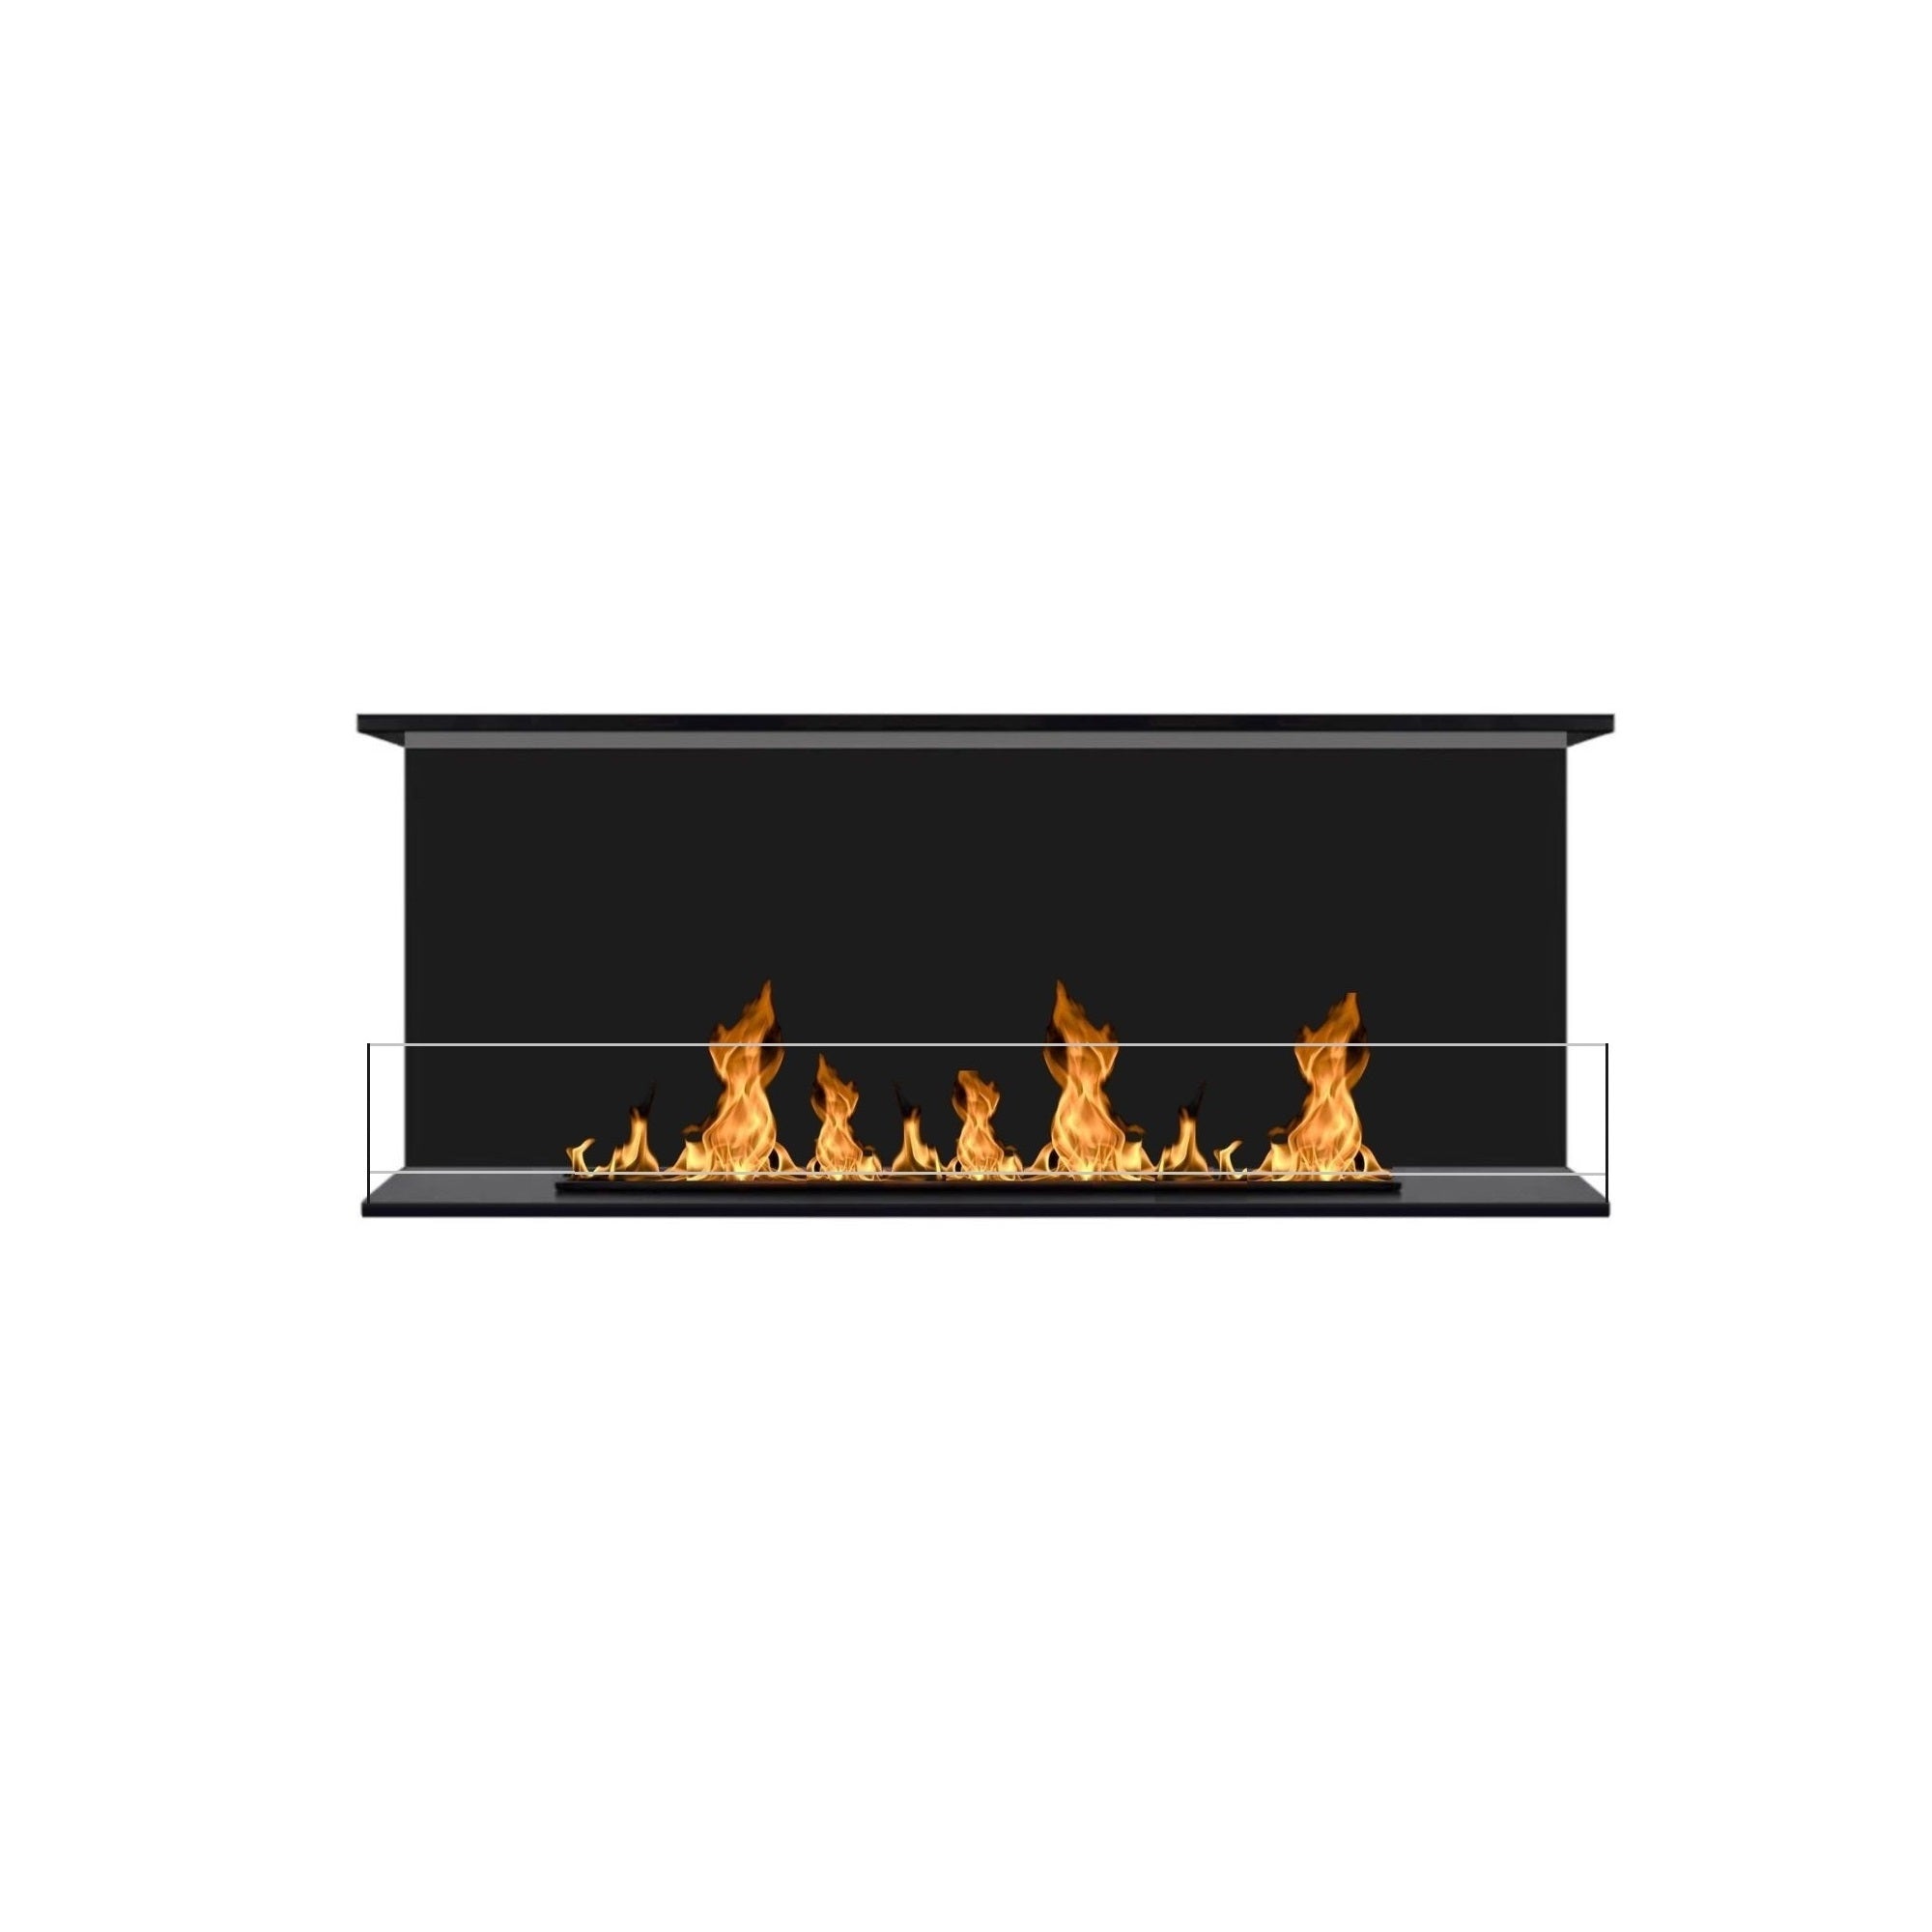 Izala Design Built-in Fireplace 80 CM